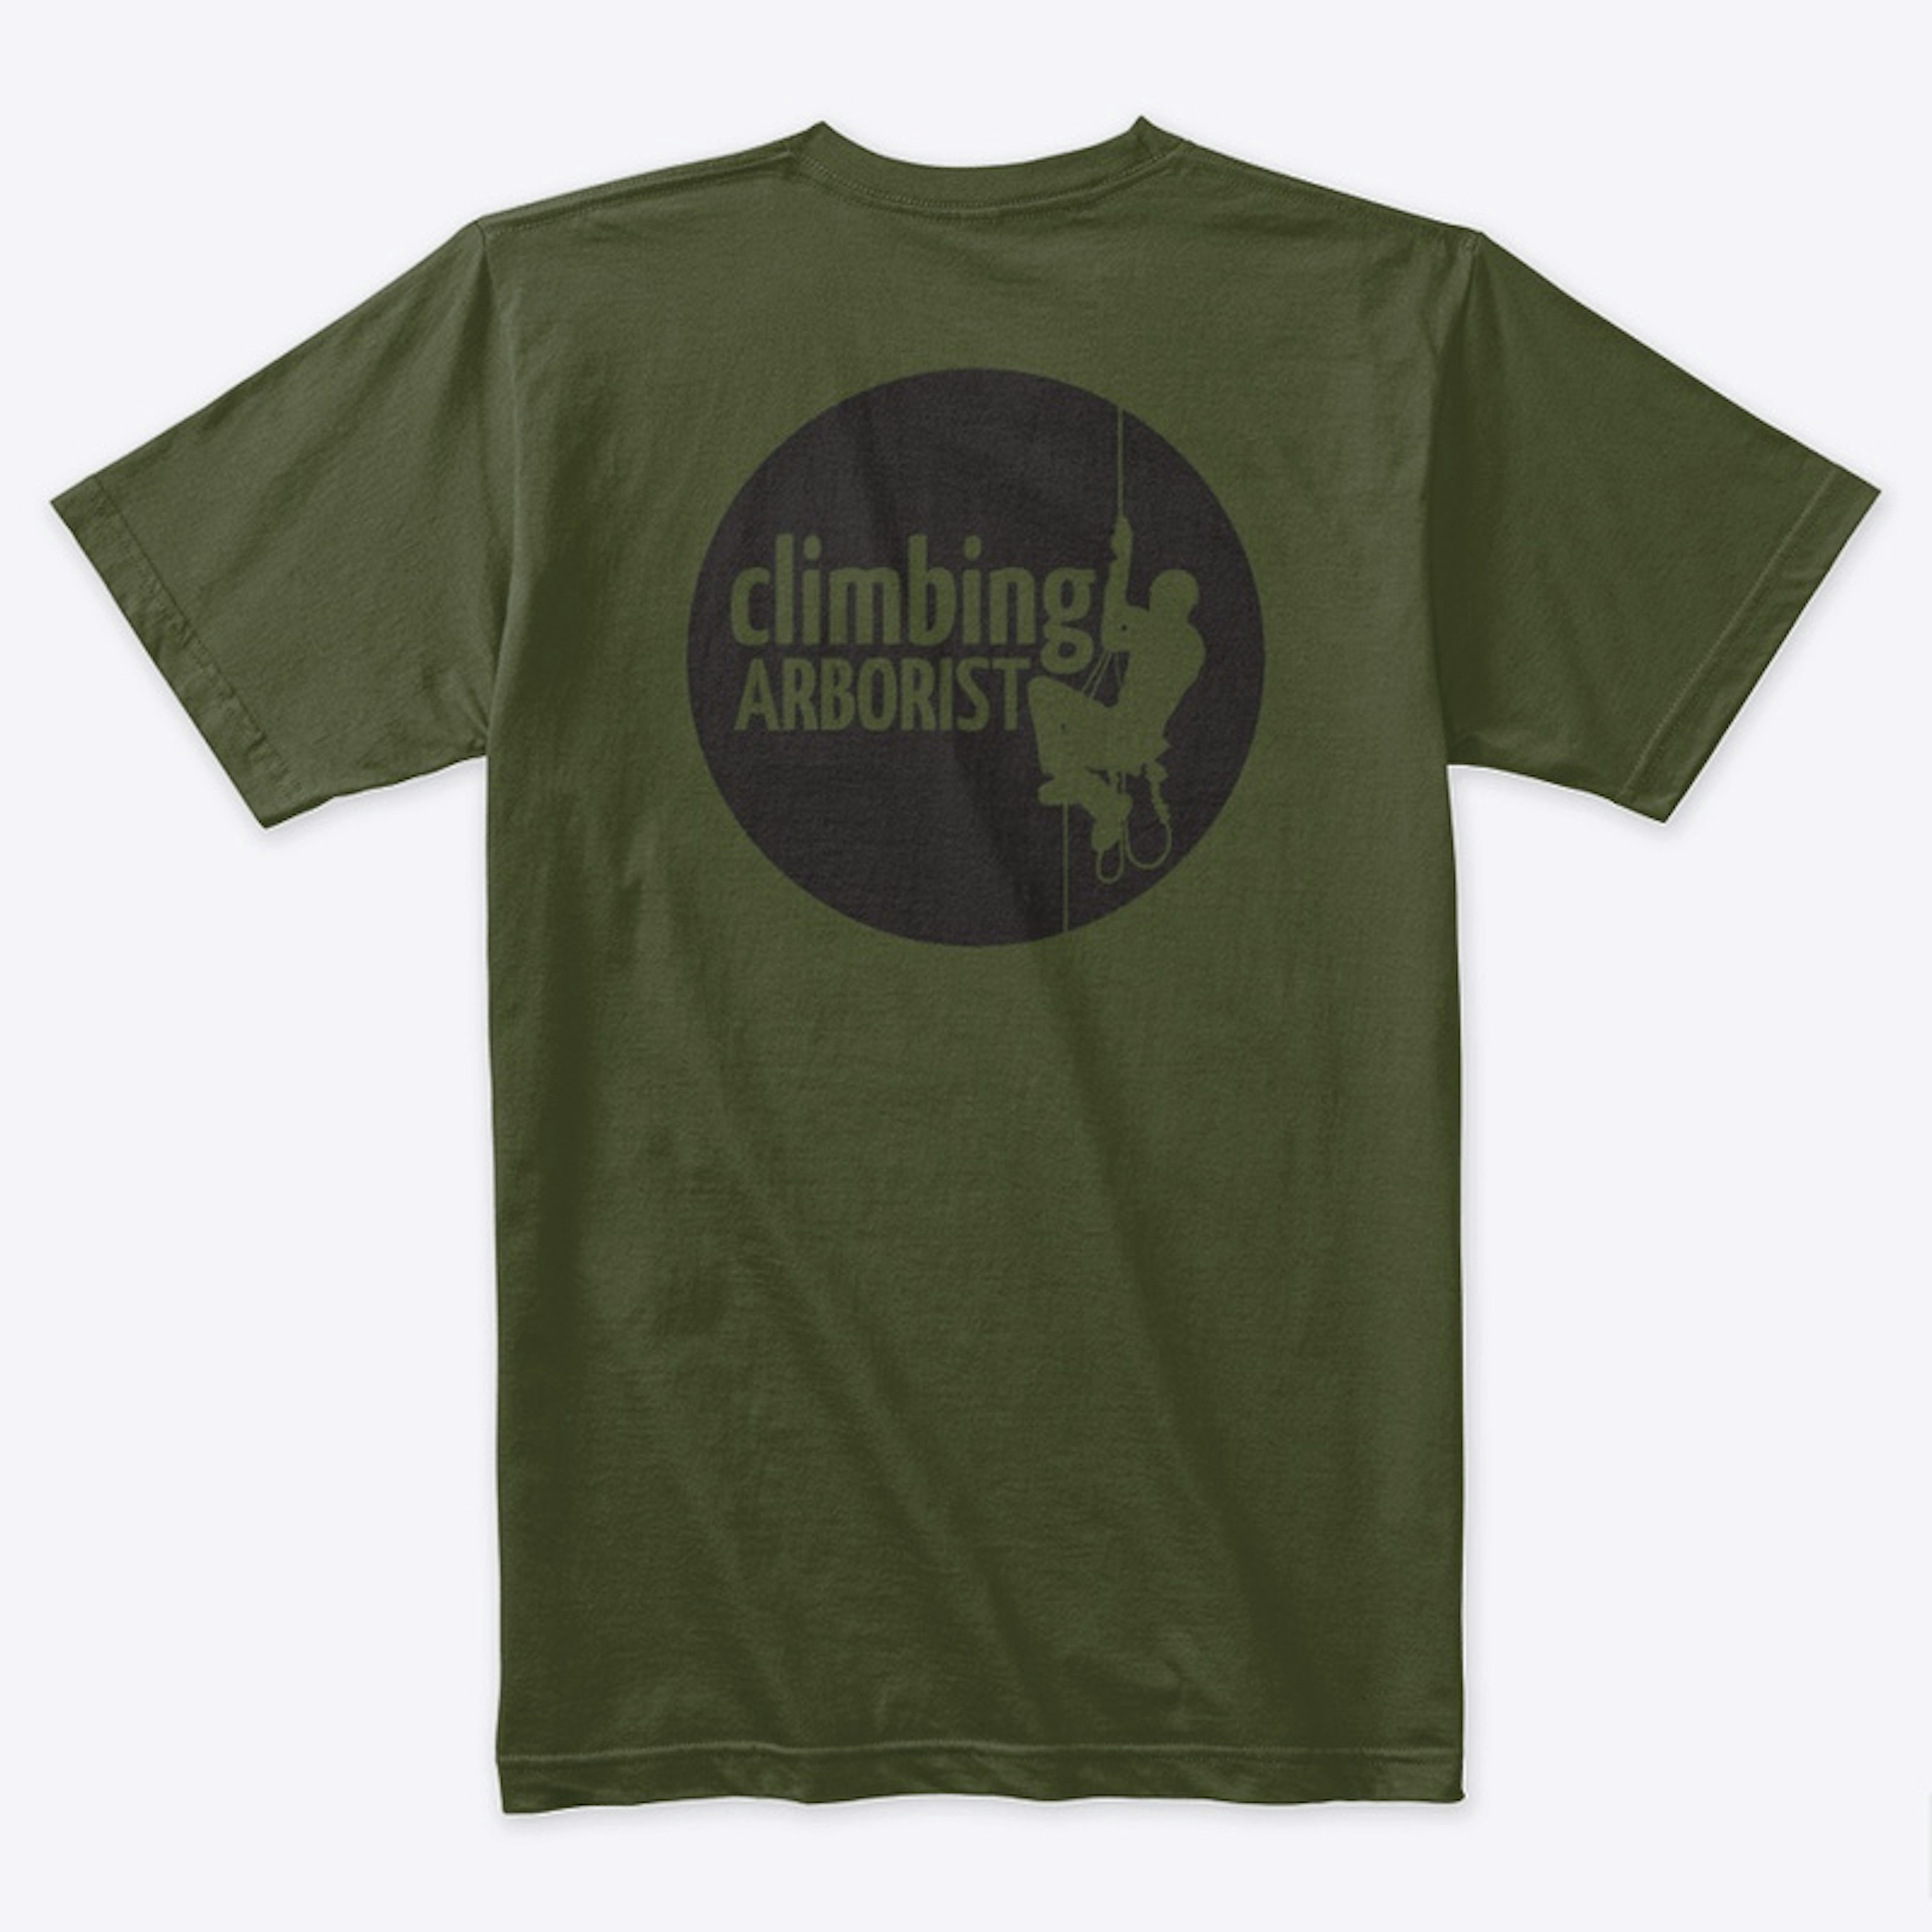 Climbing Arborist military editions